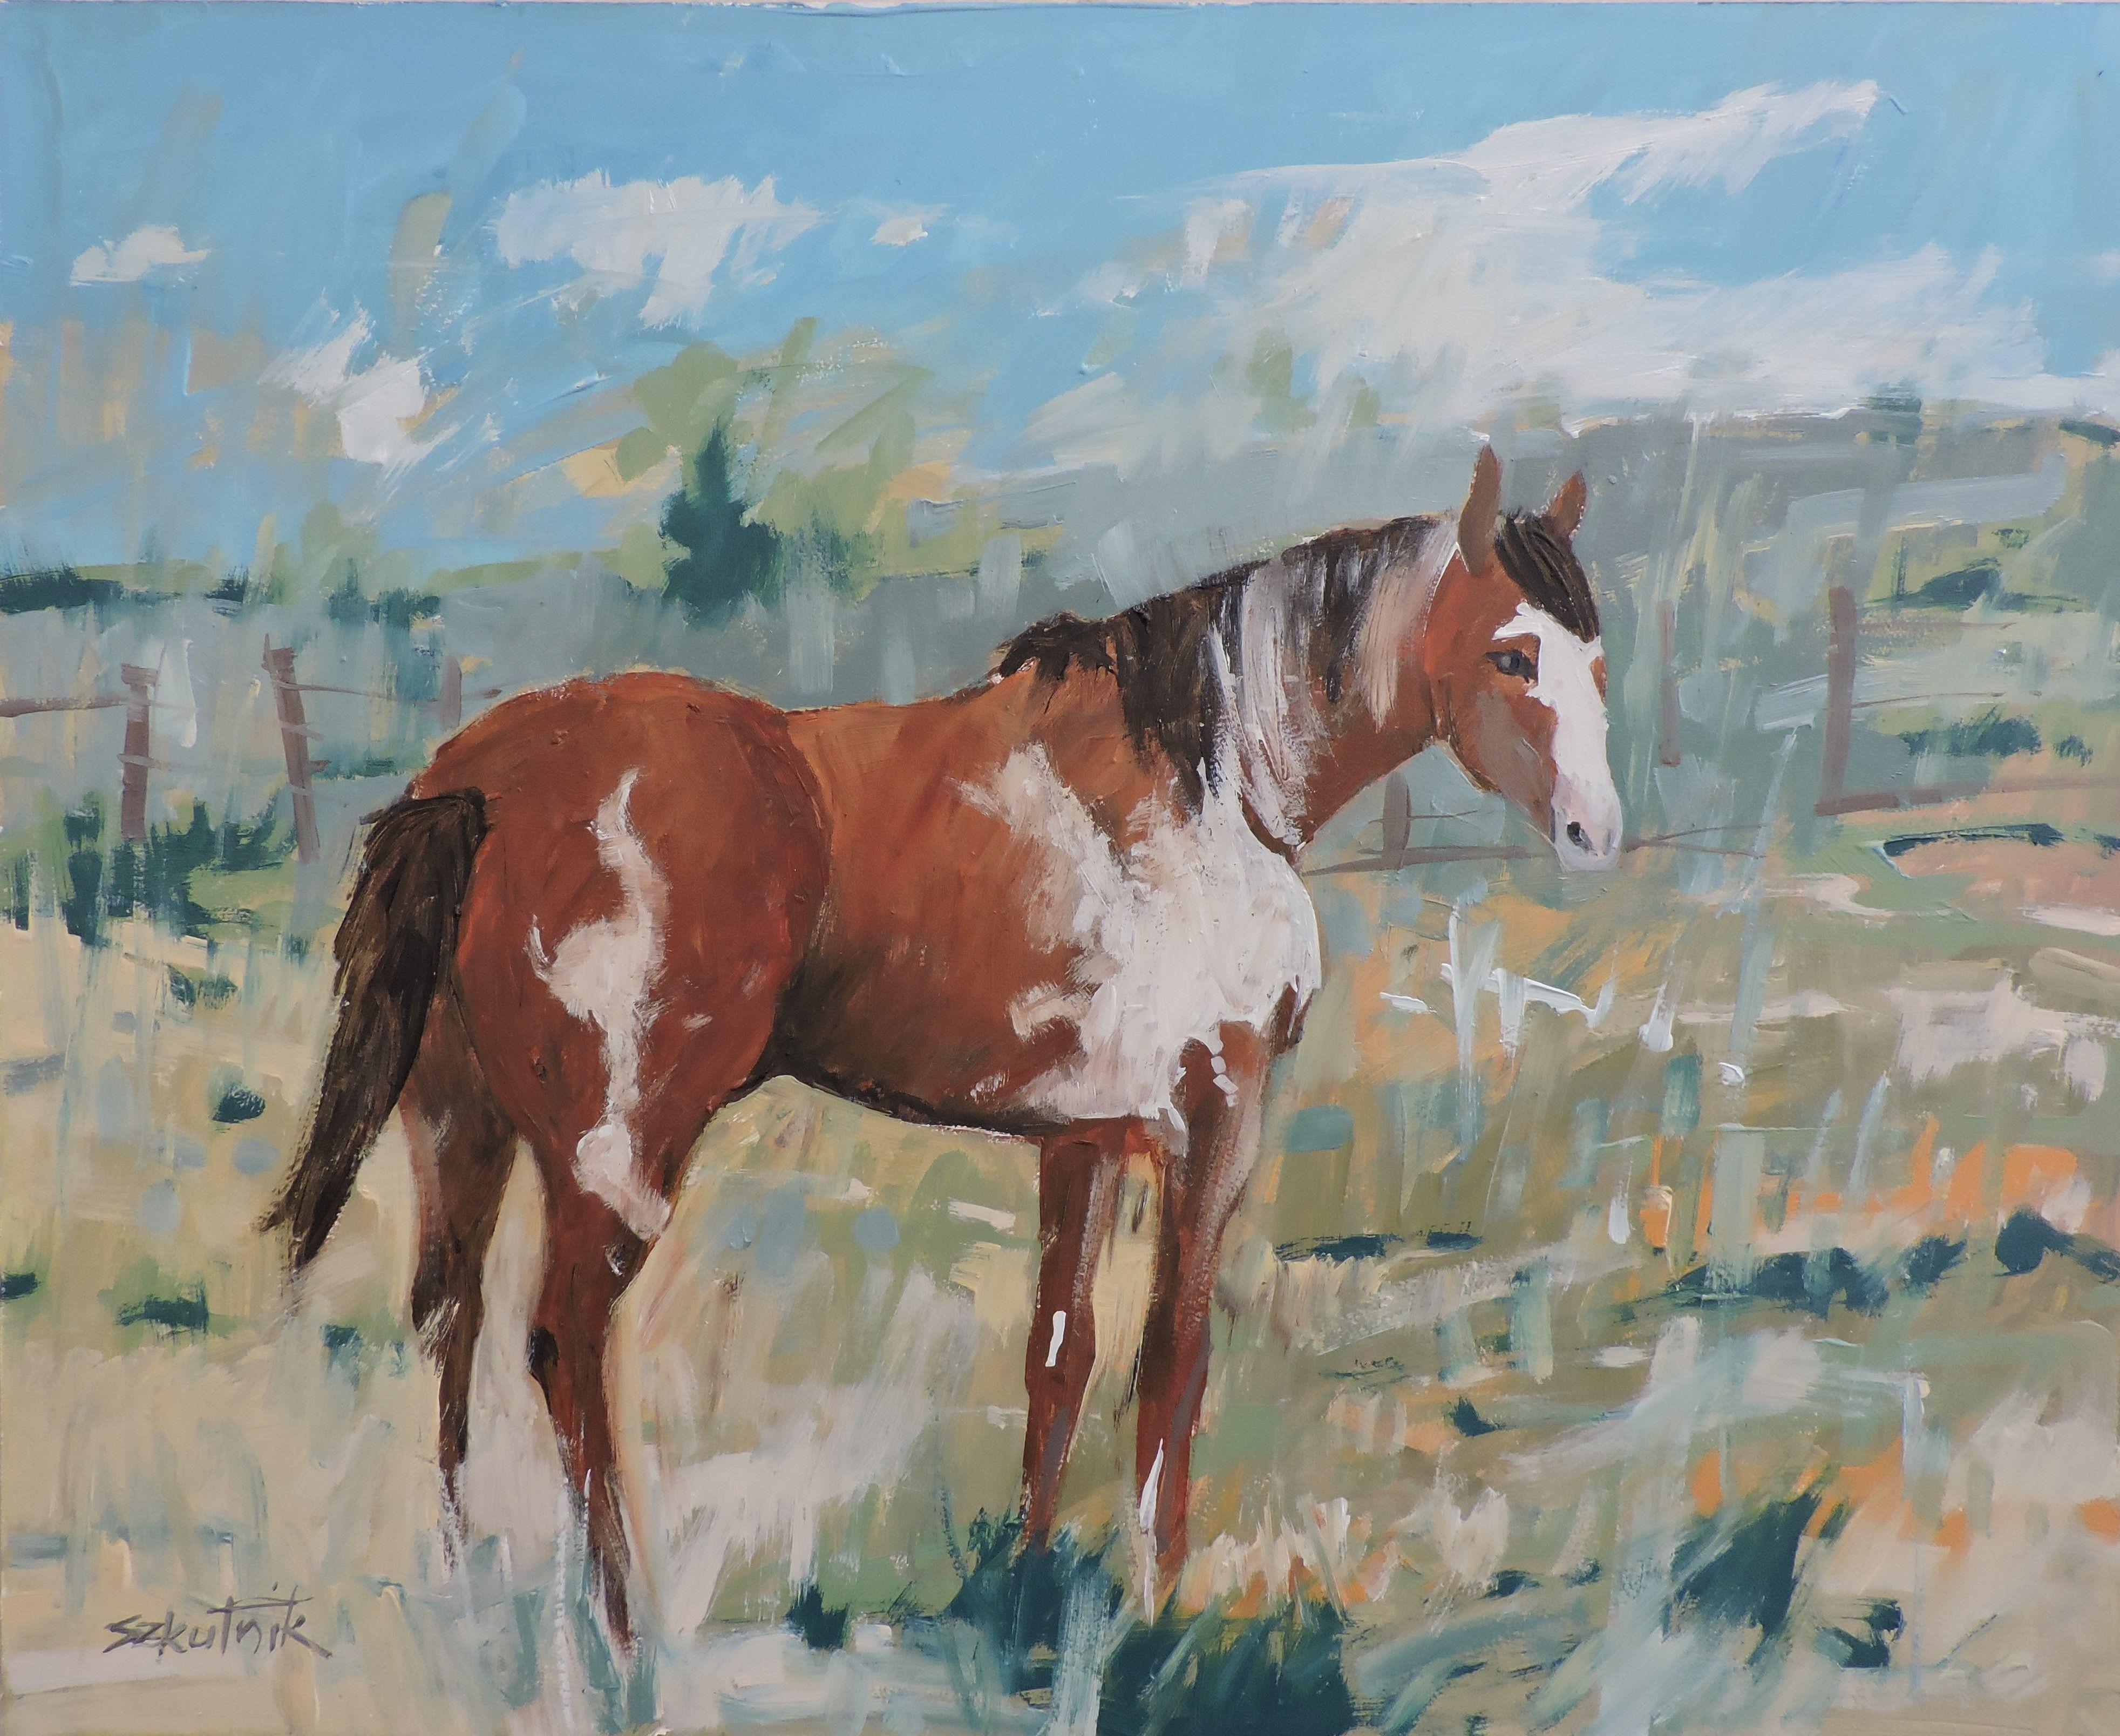 Richard Szkutnik Animal Painting - Horse Sketch #1, Painting, Oil on Wood Panel